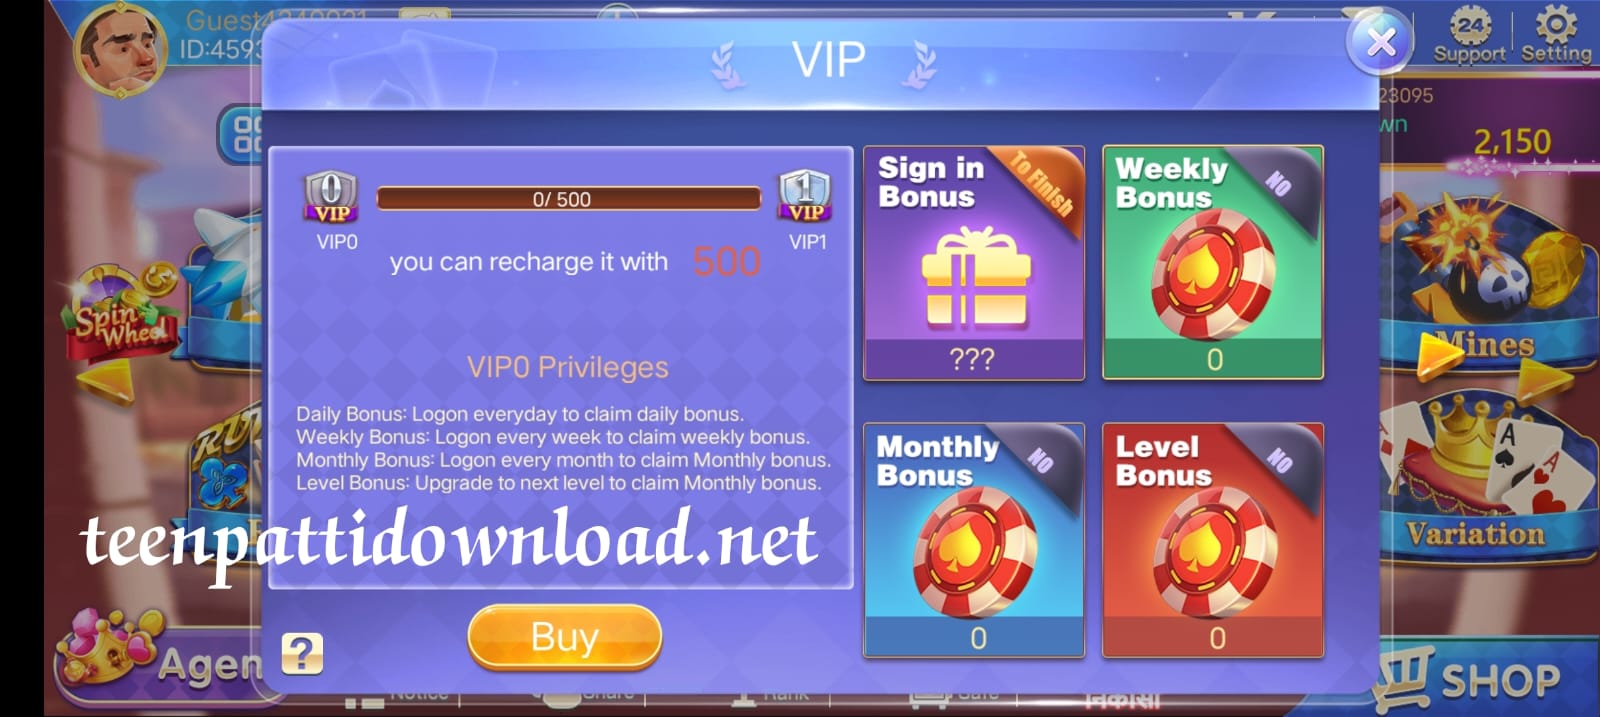 VIP Program In Teen Patti Party App